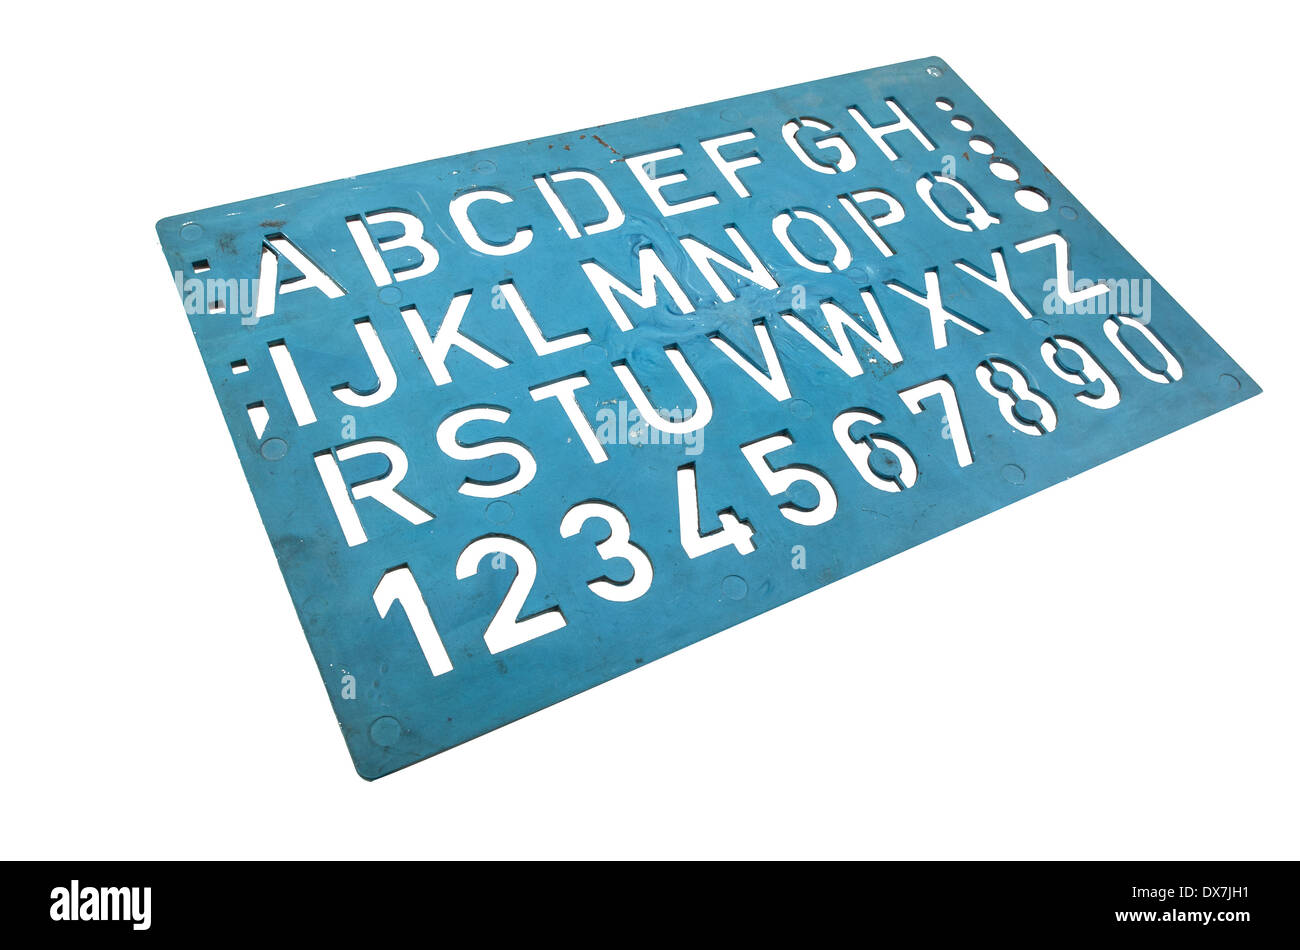 Matte Metal Letters Stencils A to Z Alphabet & Number & Symbol